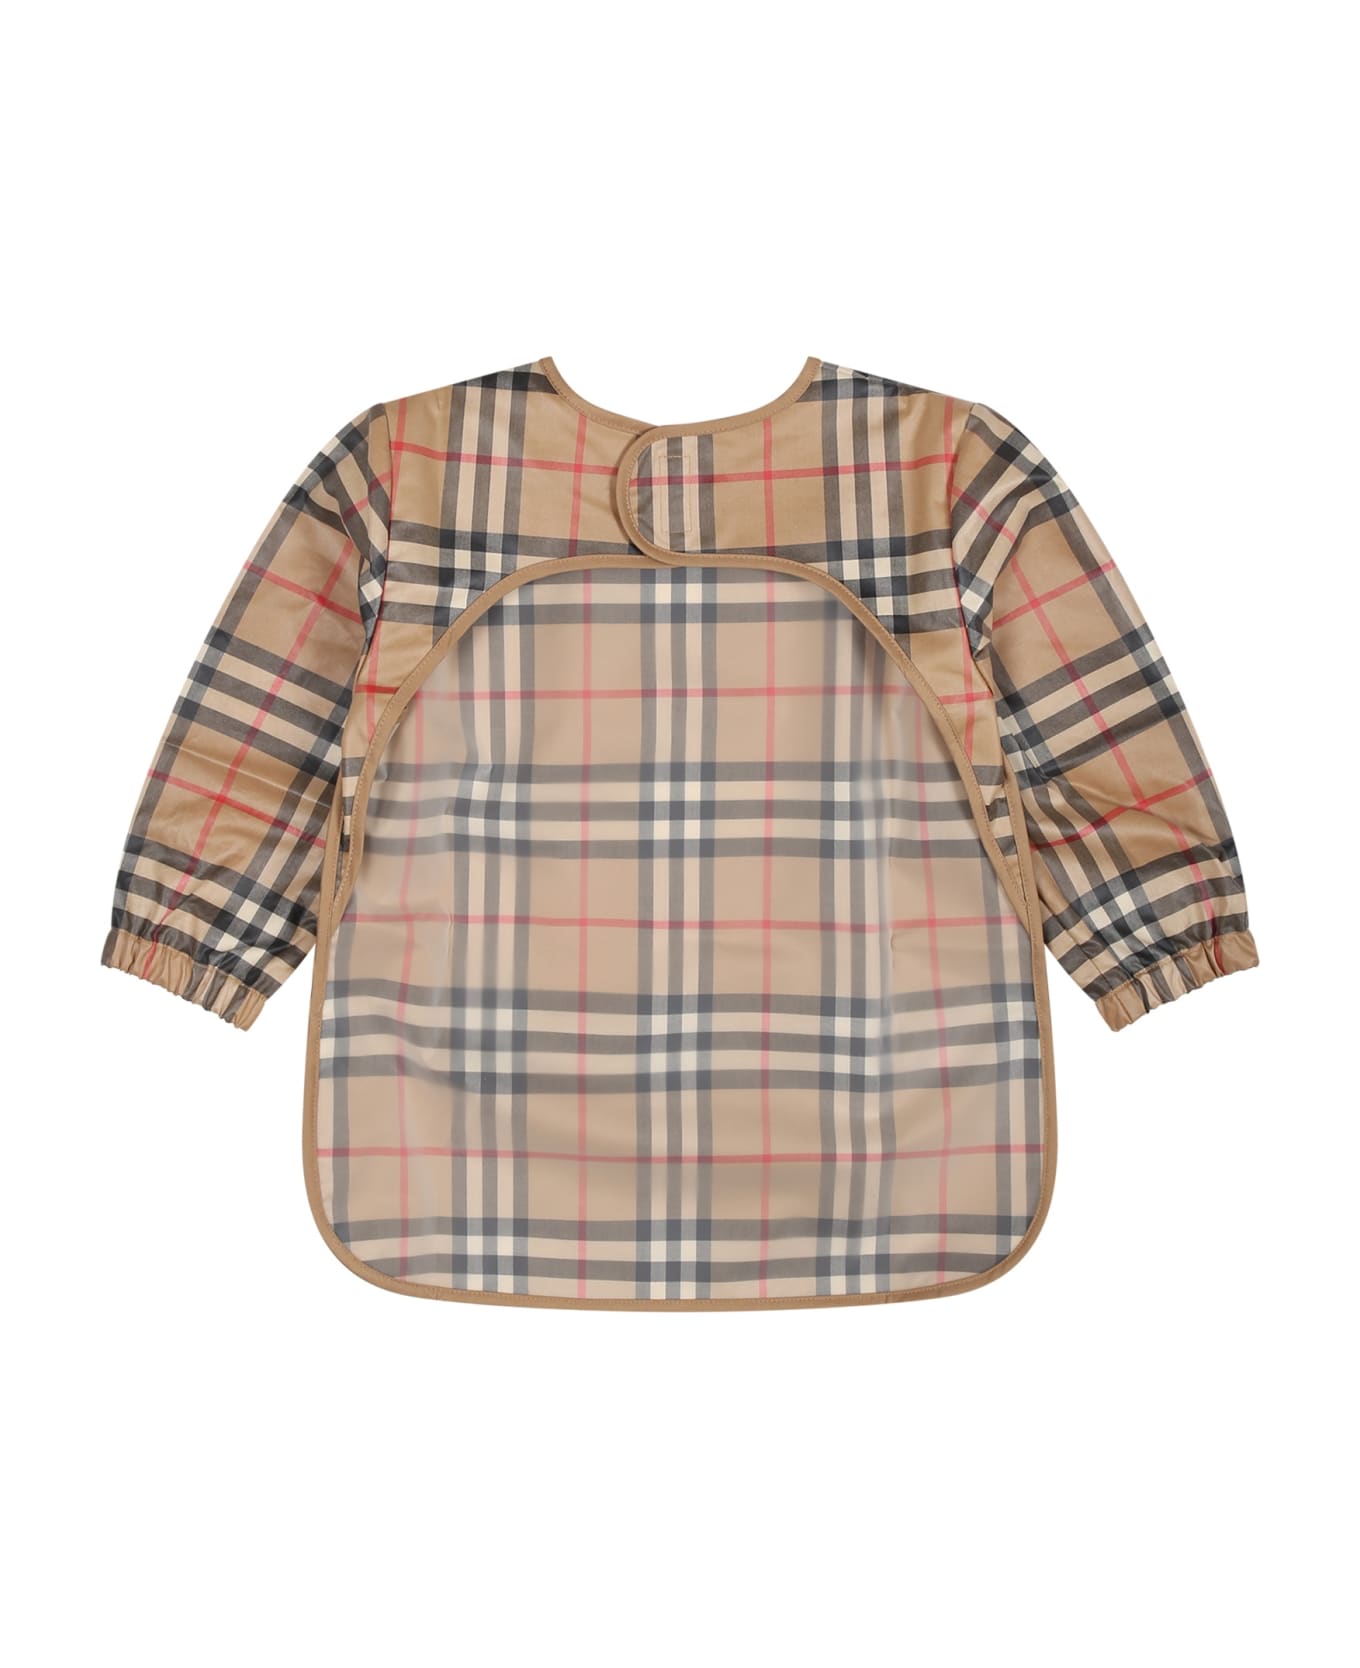 Burberry vest Beige Bib For Babykids With Vintage Check - Beige